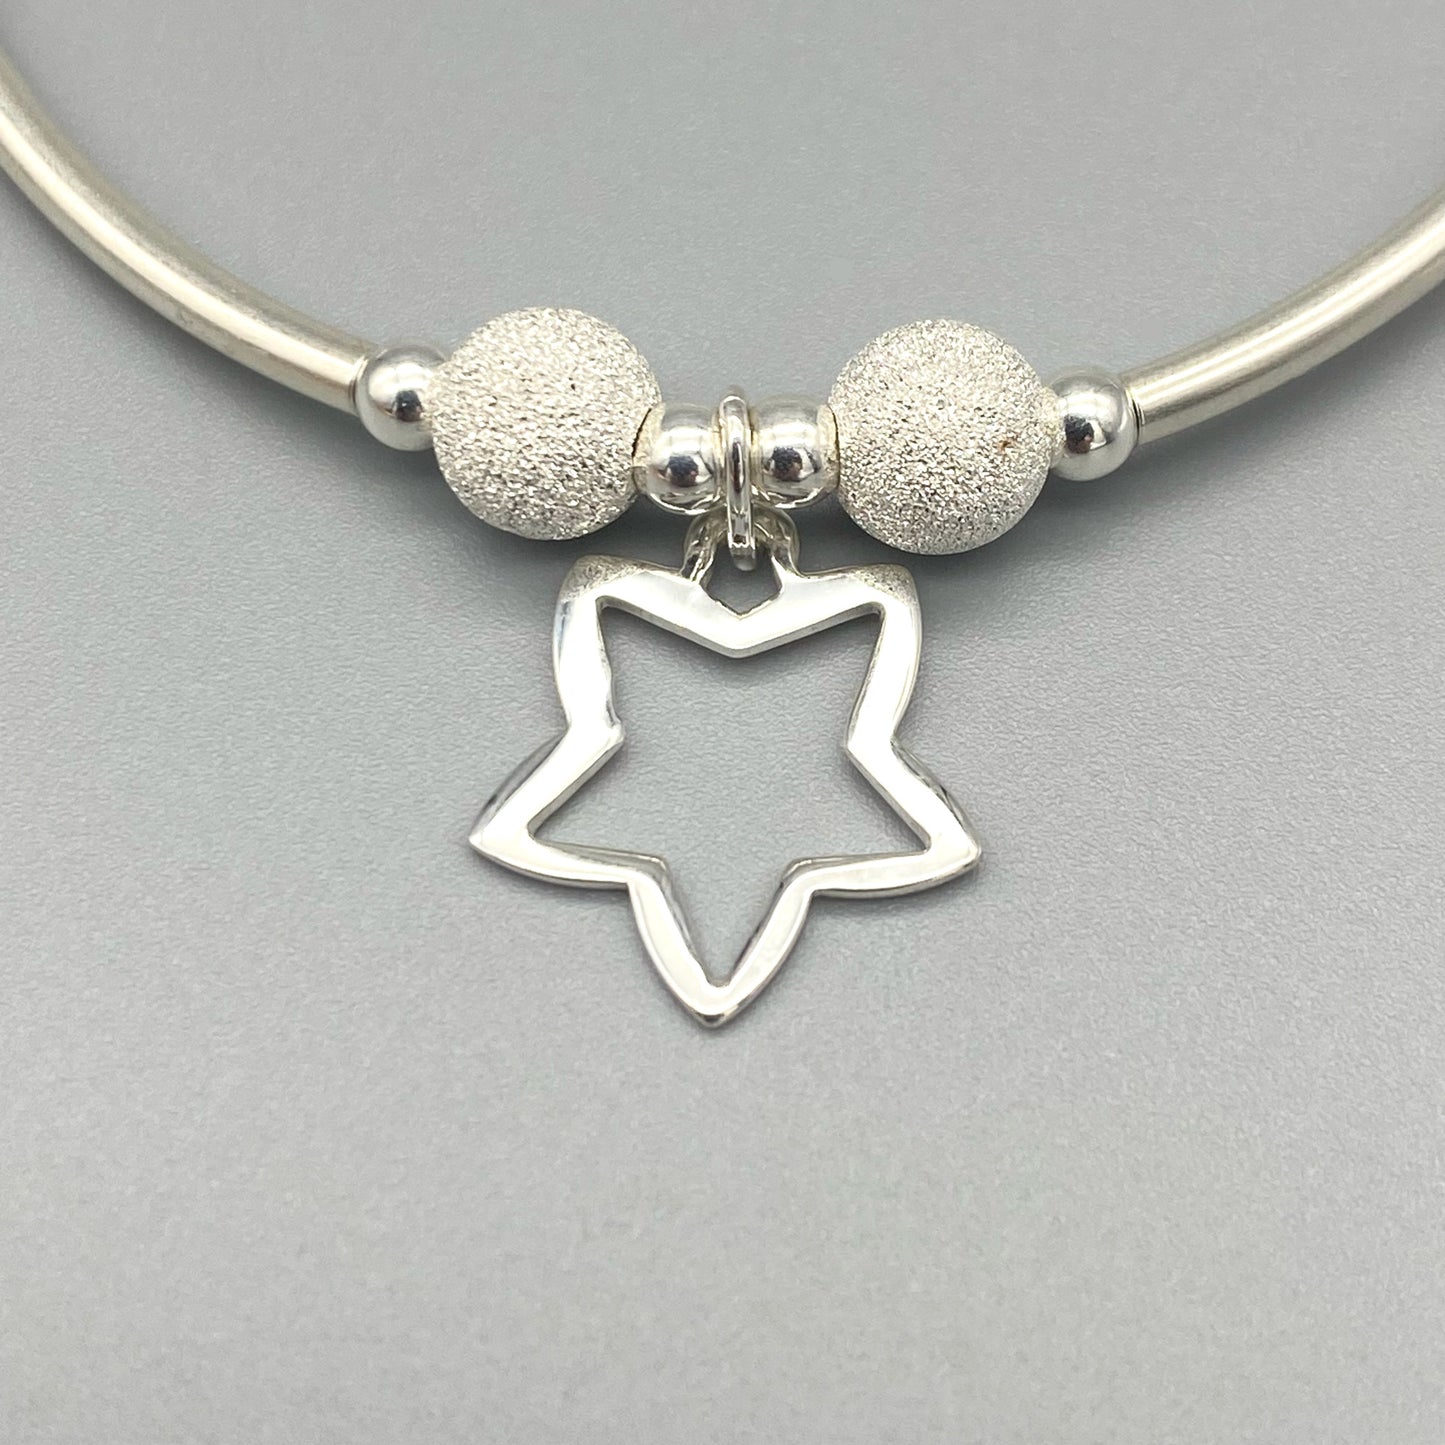 closeup of Open star charm sterling silver women's charm bracelet by My Silver Wish